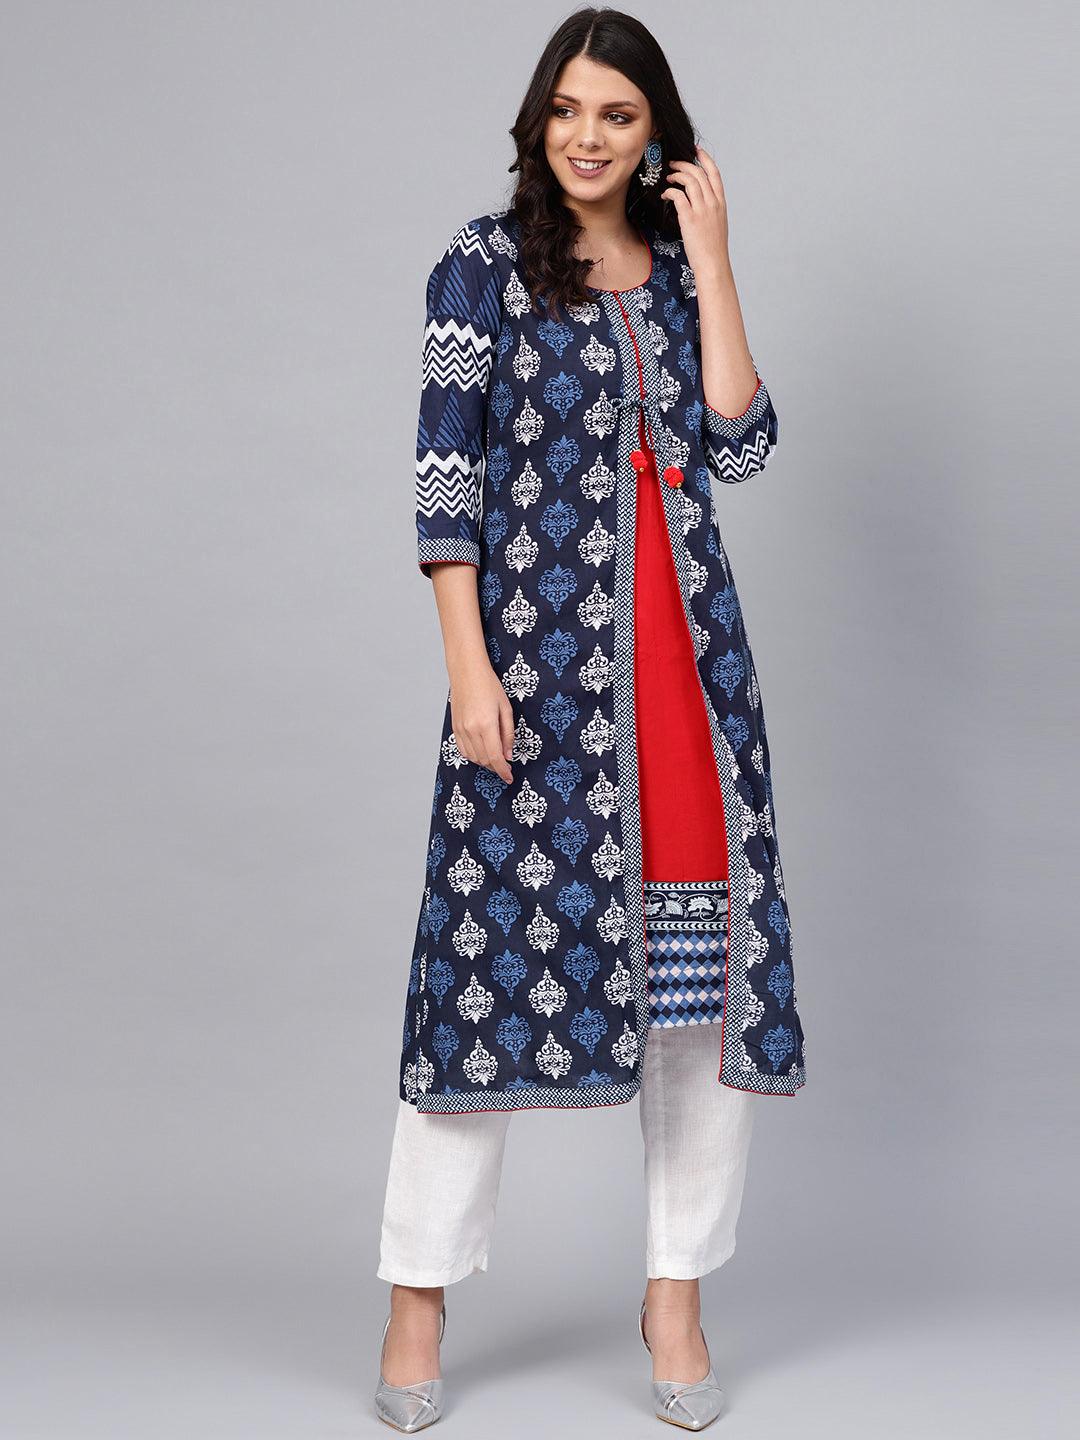 39 Types of Kurti Designs Every Woman Should Know - LooksGud.com | Kurti  designs, Salwar designs, Fashion vocabulary